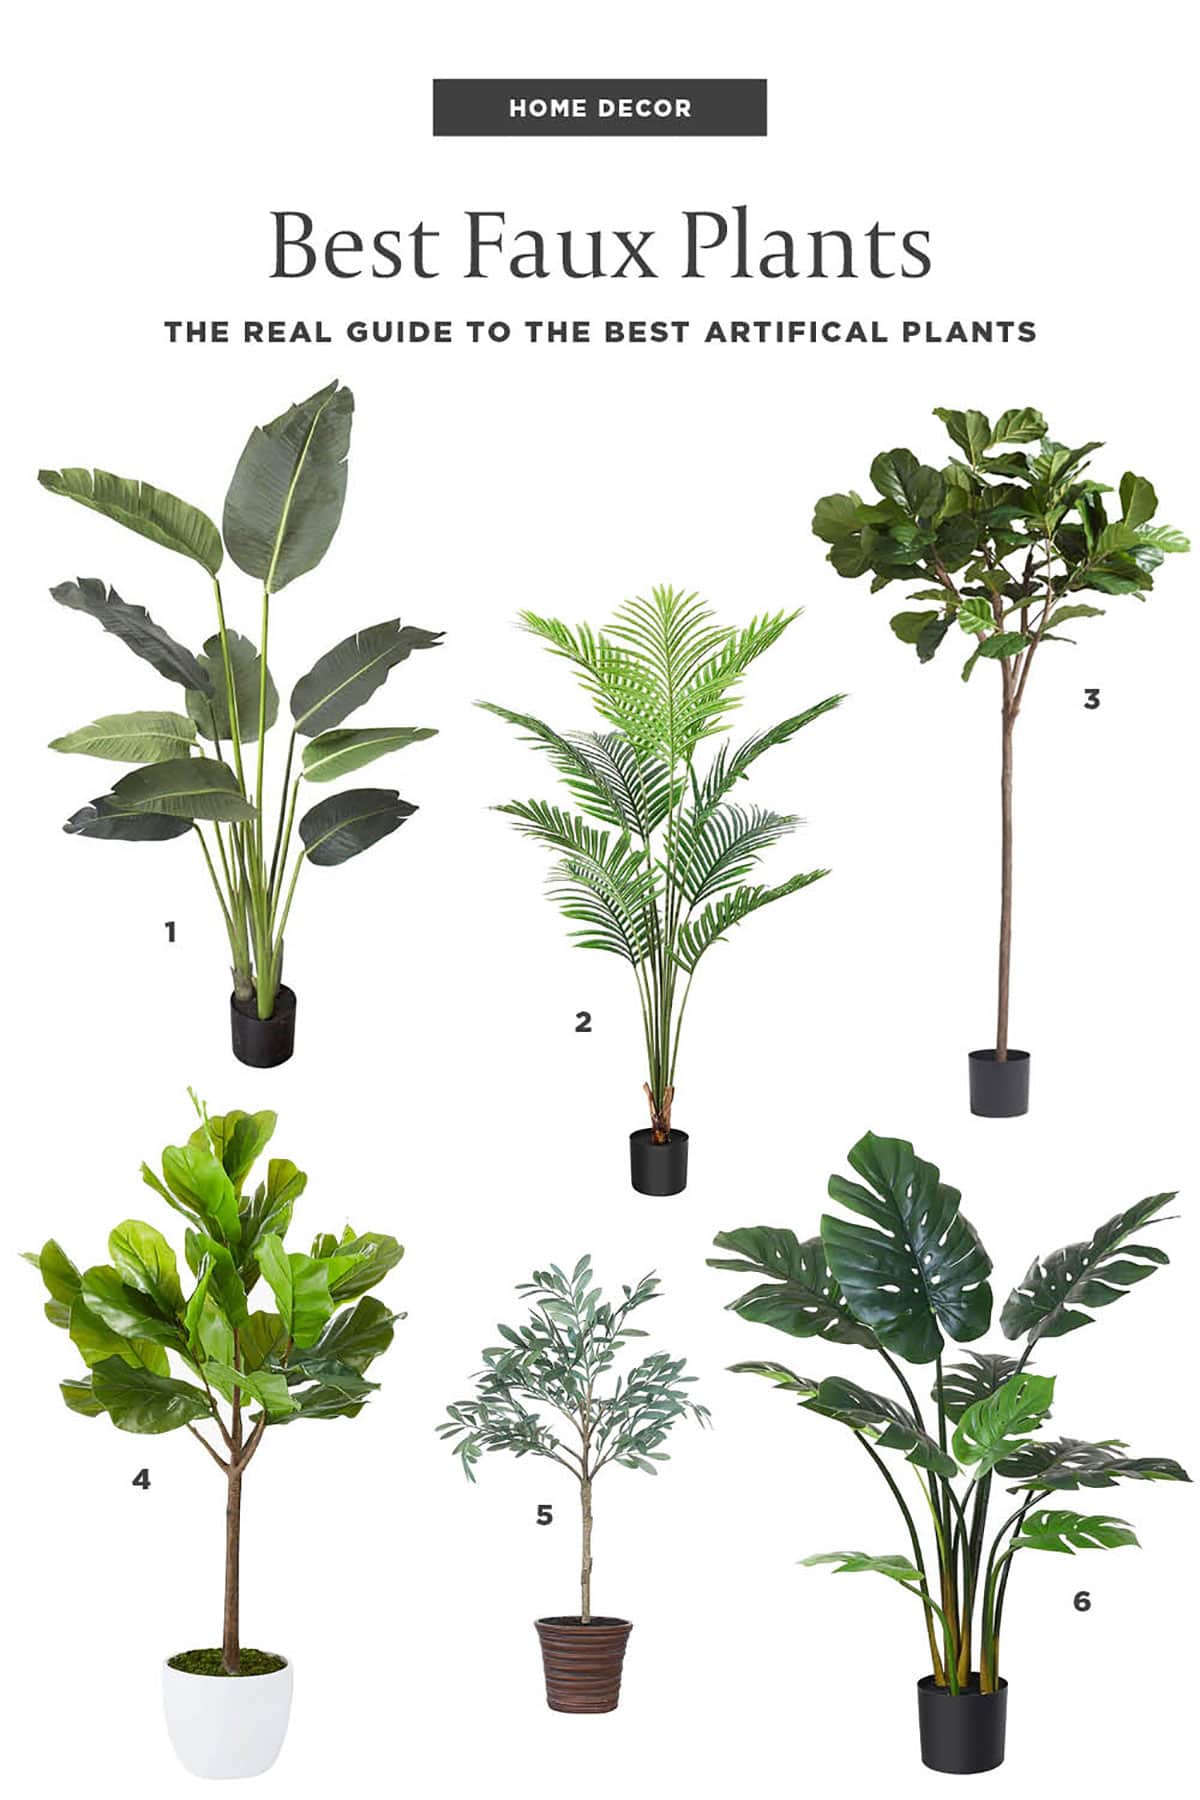 The 8 Best Artificial Plants